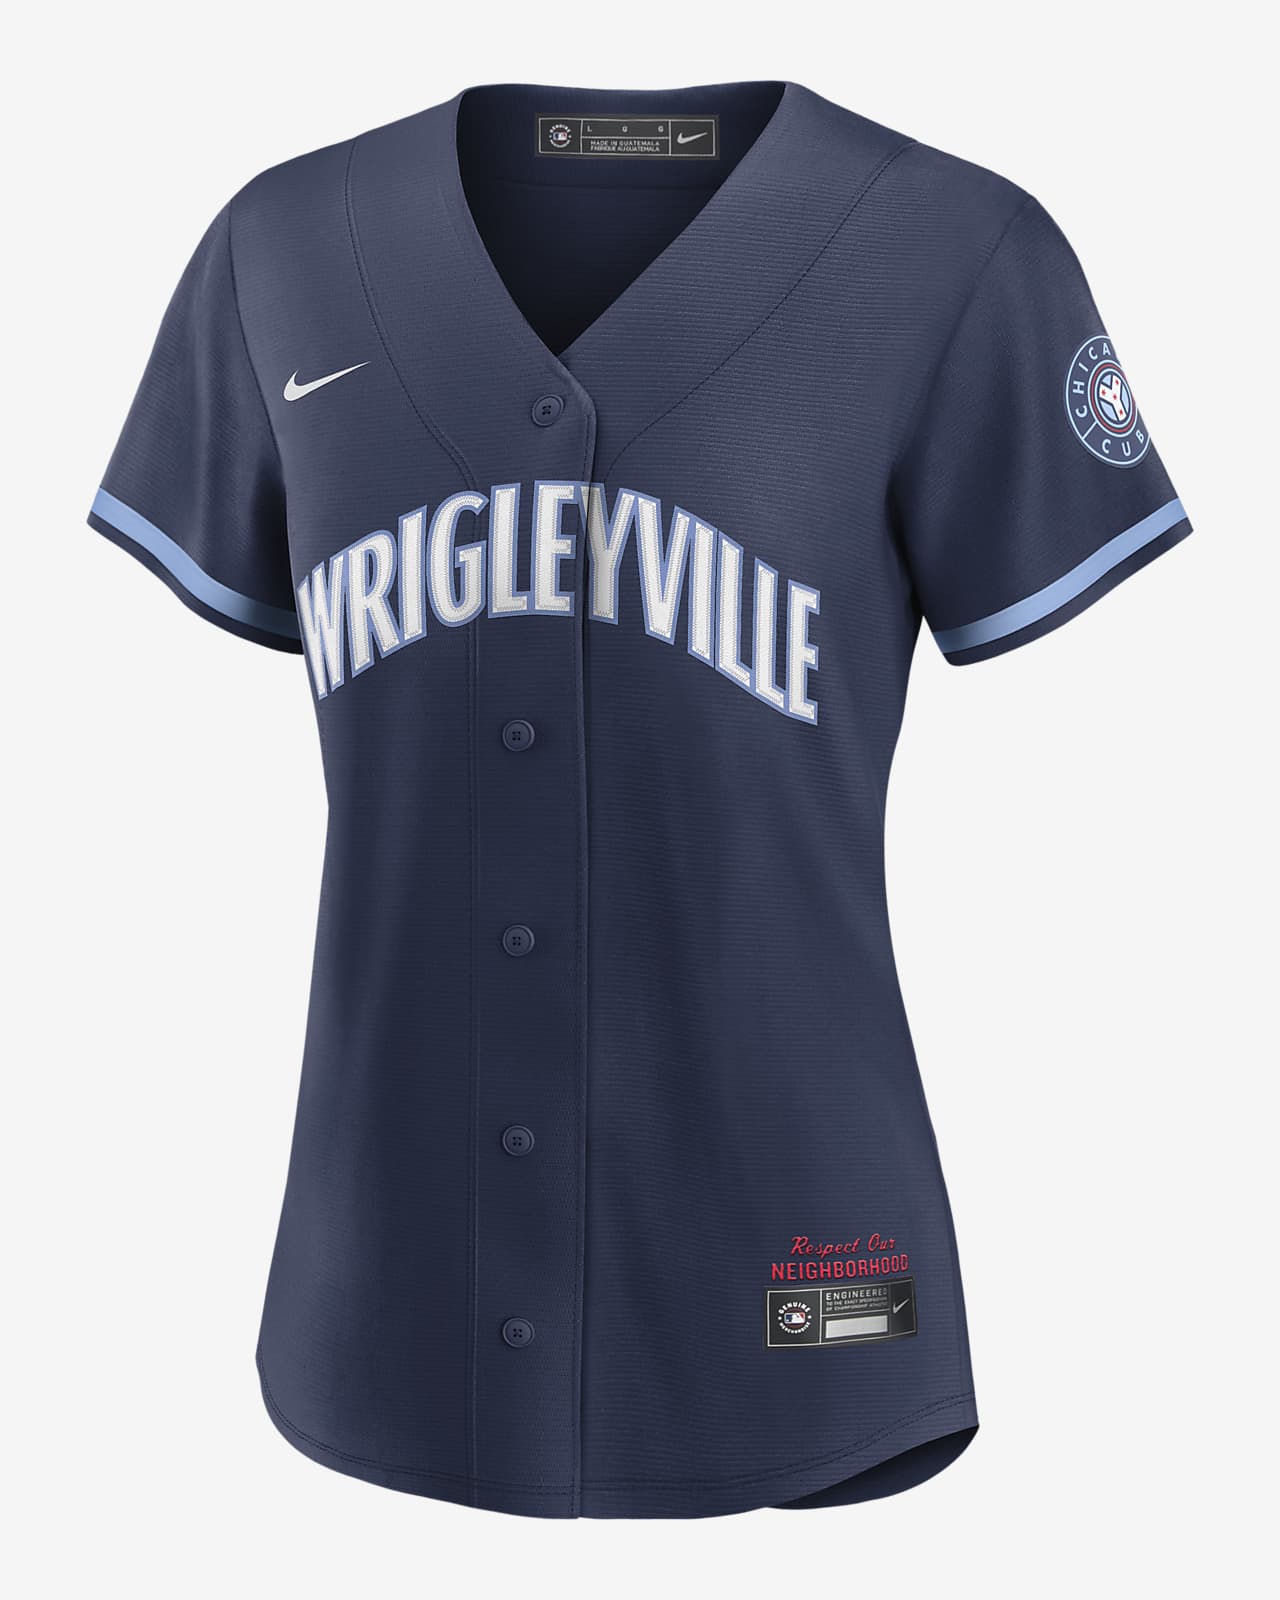 MLB Wrigleyville City Connect Women's Replica Baseball Jersey.